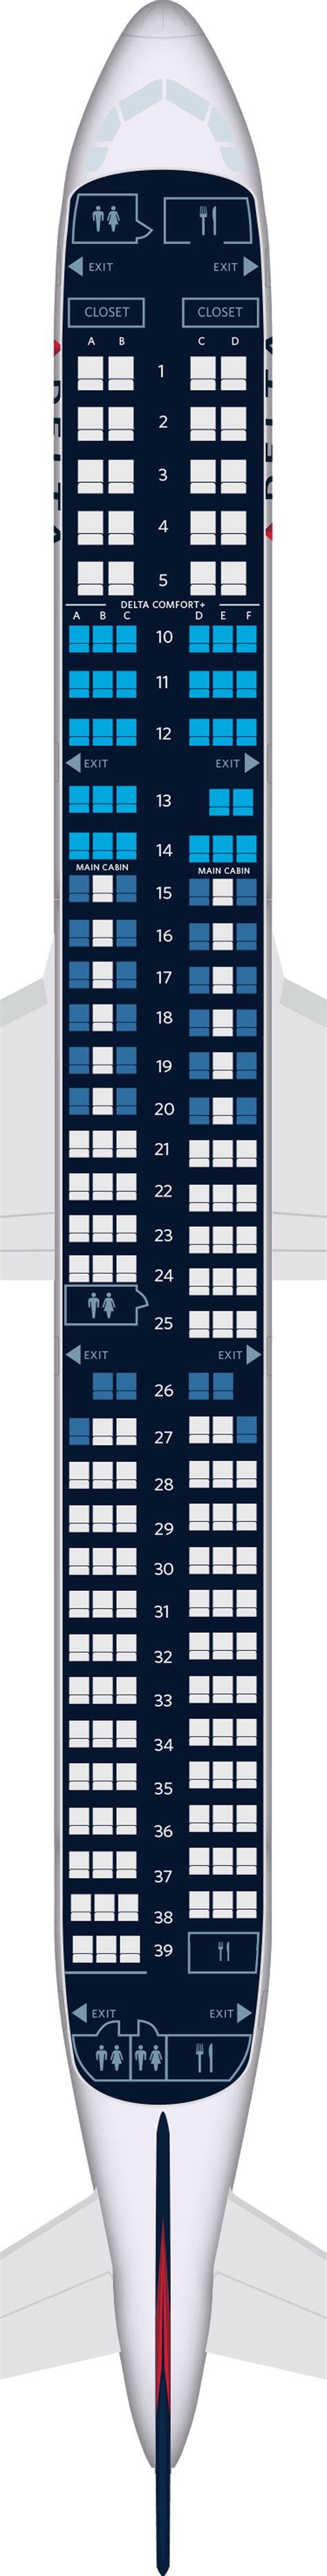 Lufthansa Airbus A321neo Seat Map Image To U